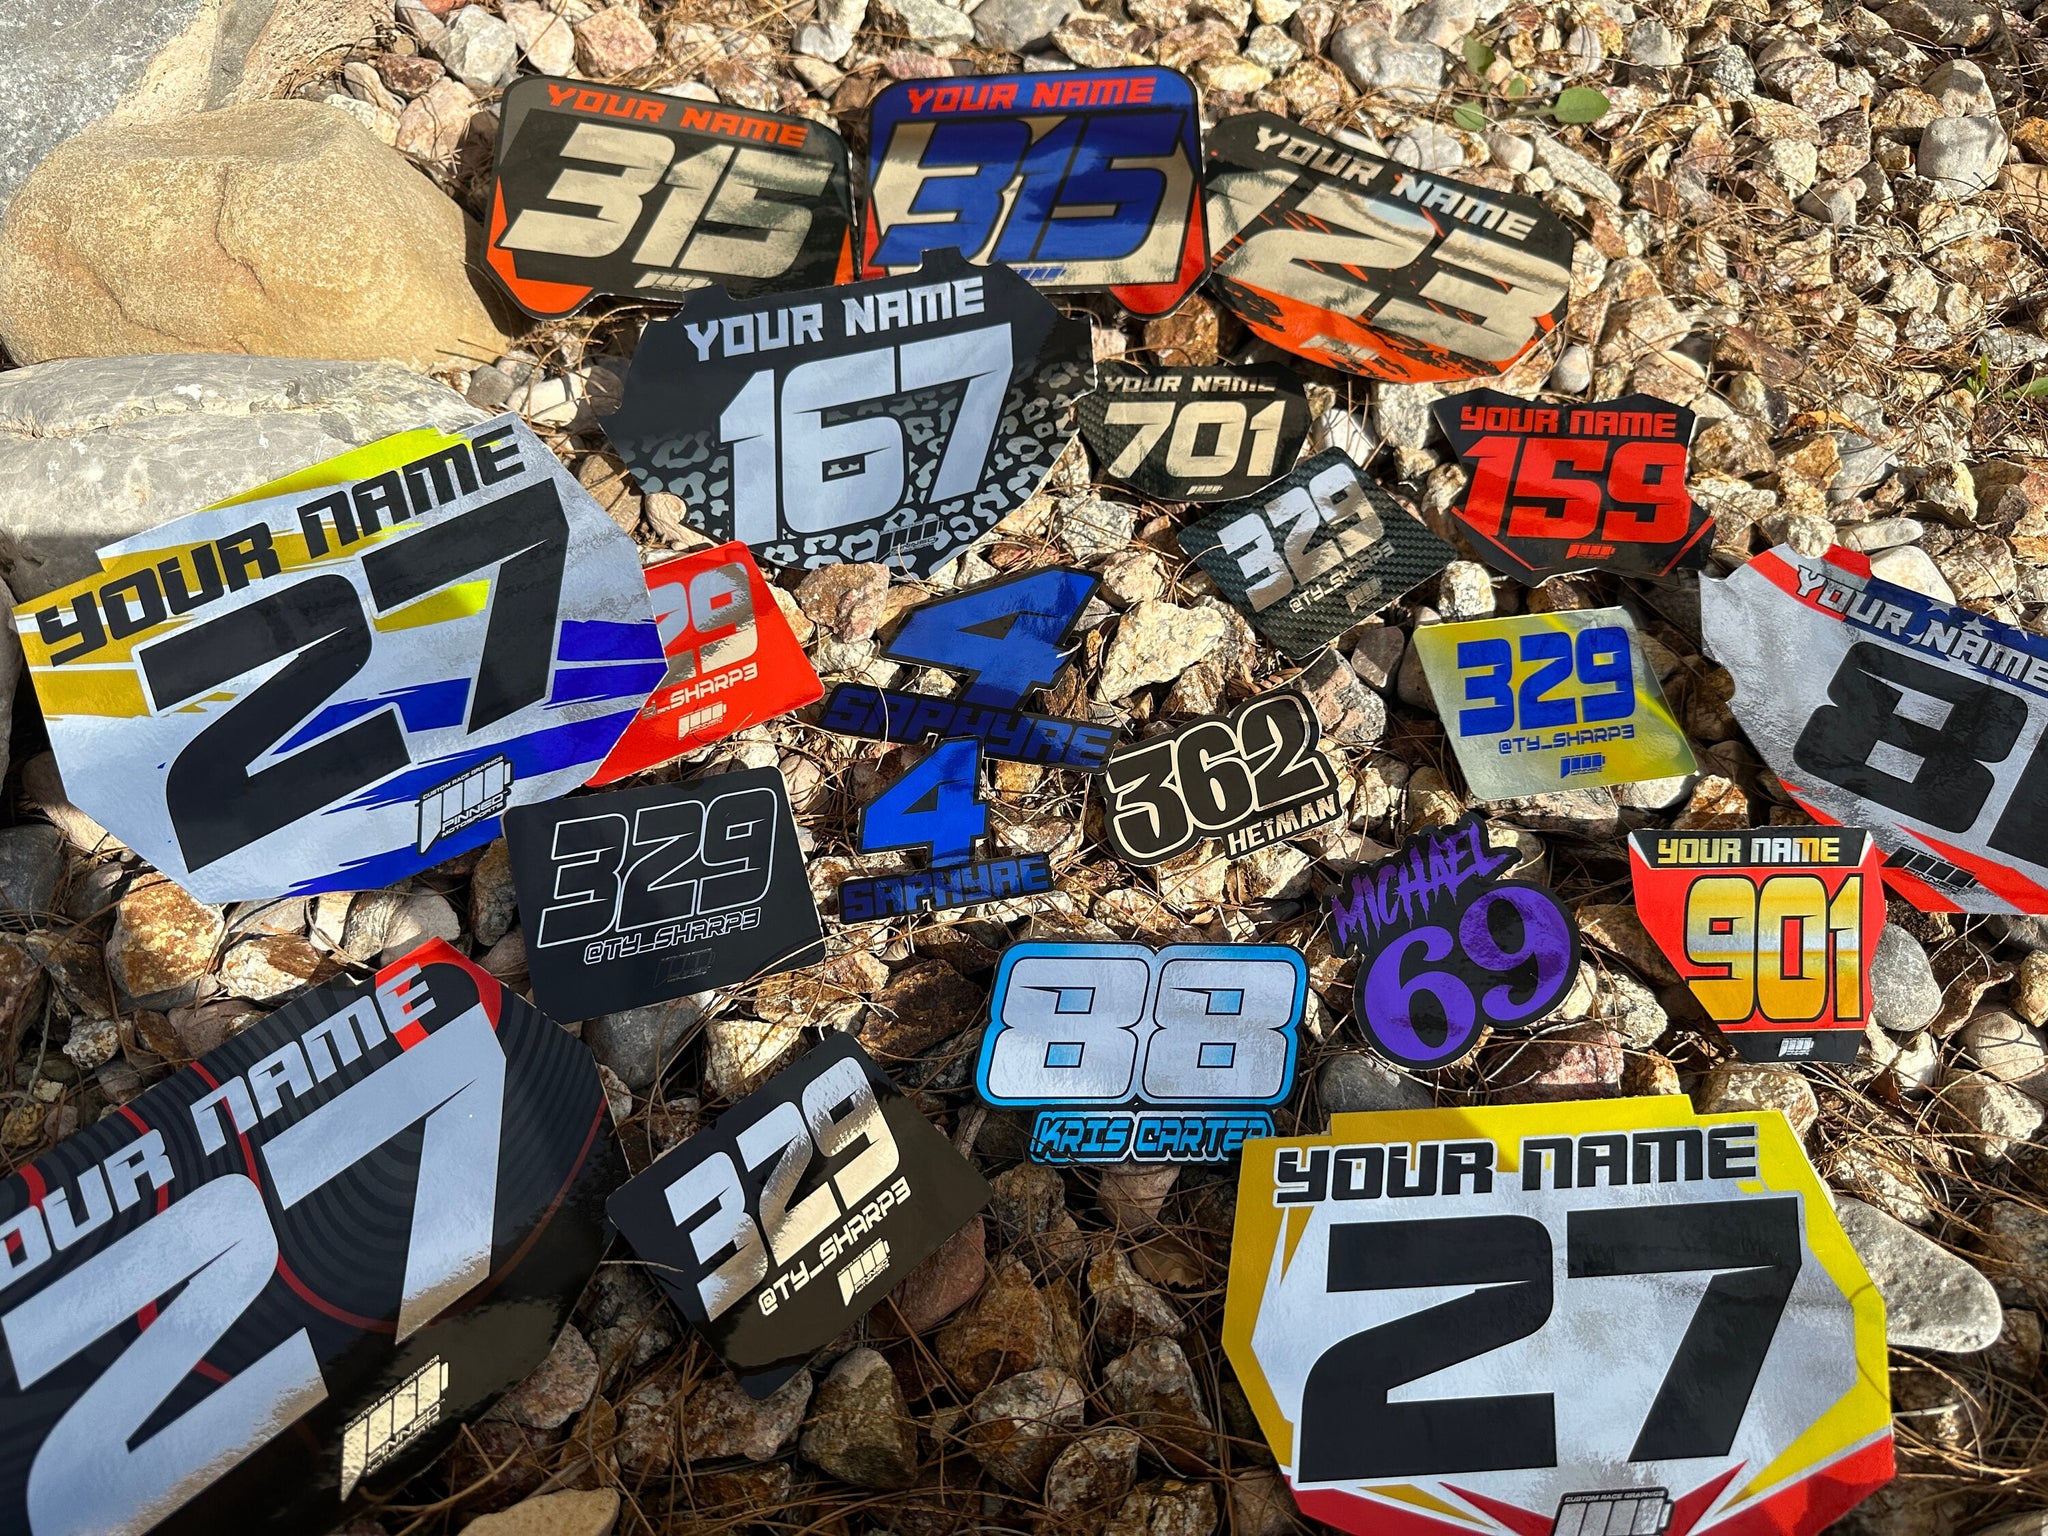 Chrome Name & Number Decals, Metallic Waterproof Racing Stickers, Gold Motorsports Decals